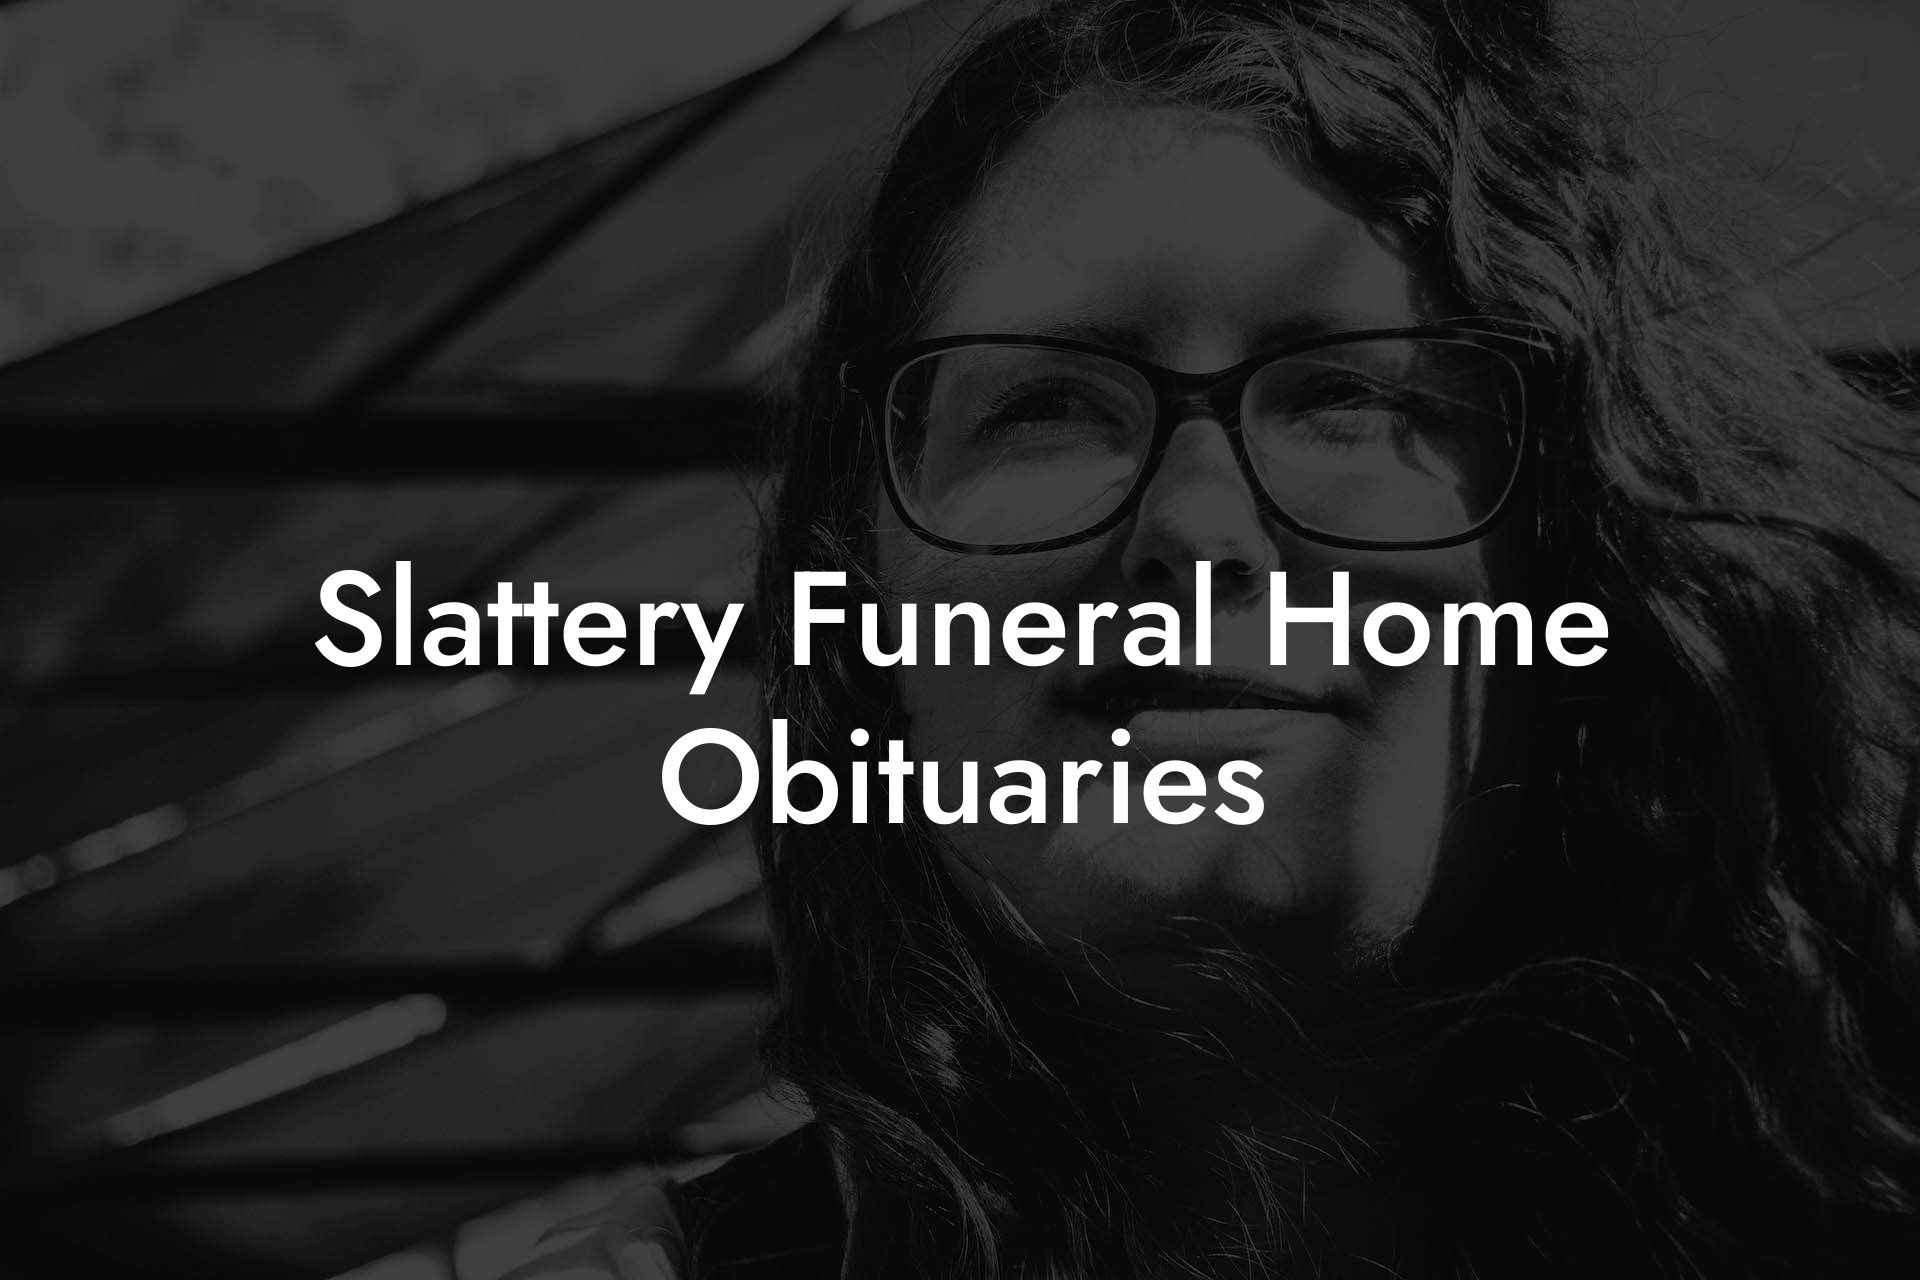 Slattery Funeral Home Obituaries